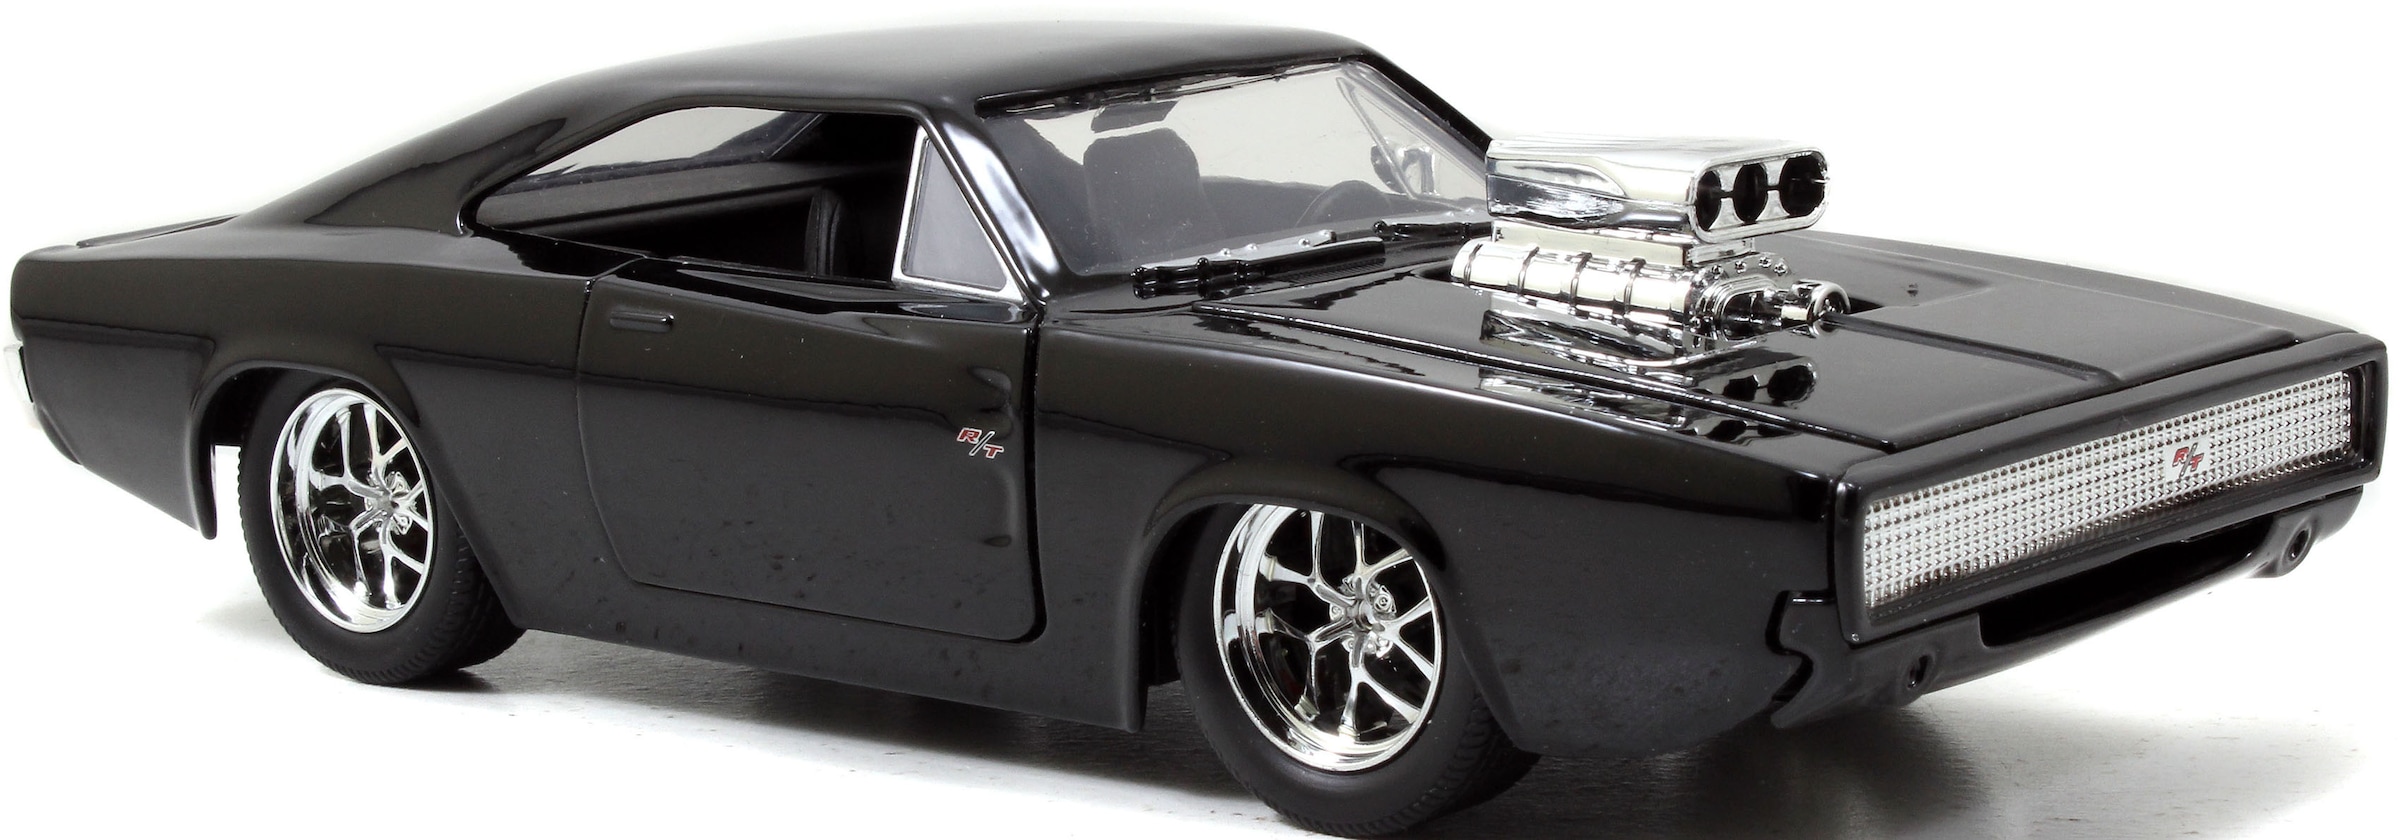 JADA Spielzeug-Auto »Fast & Furious, Dodge Charger«